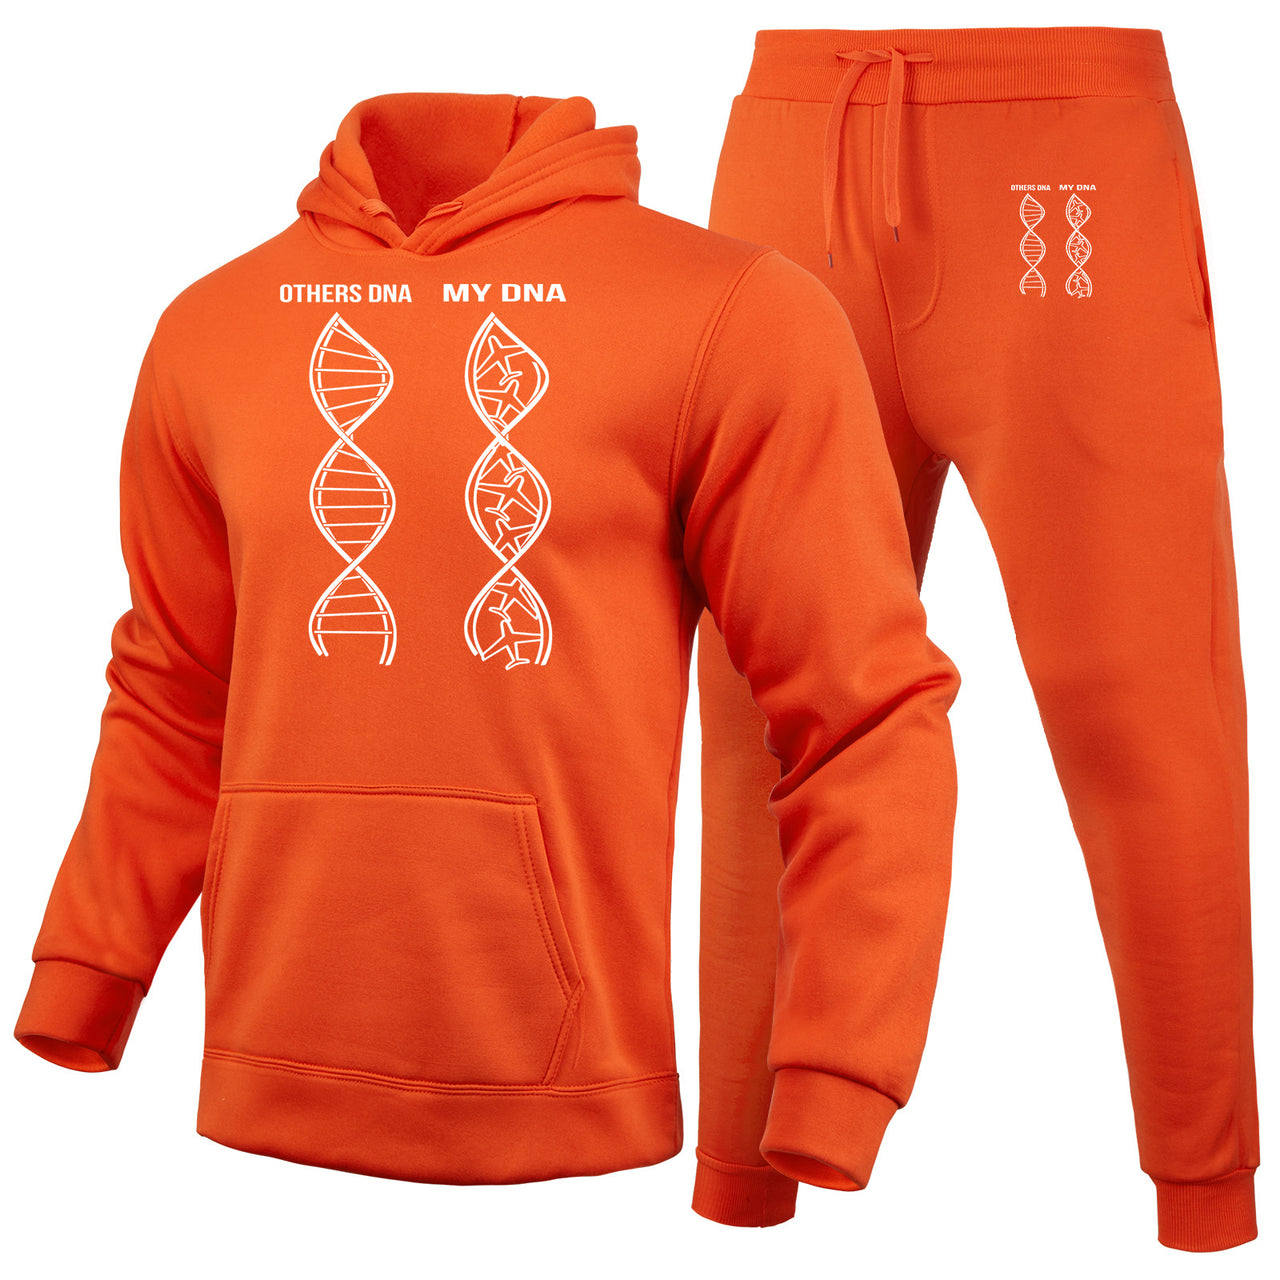 Aviation DNA Designed Hoodies & Sweatpants Set